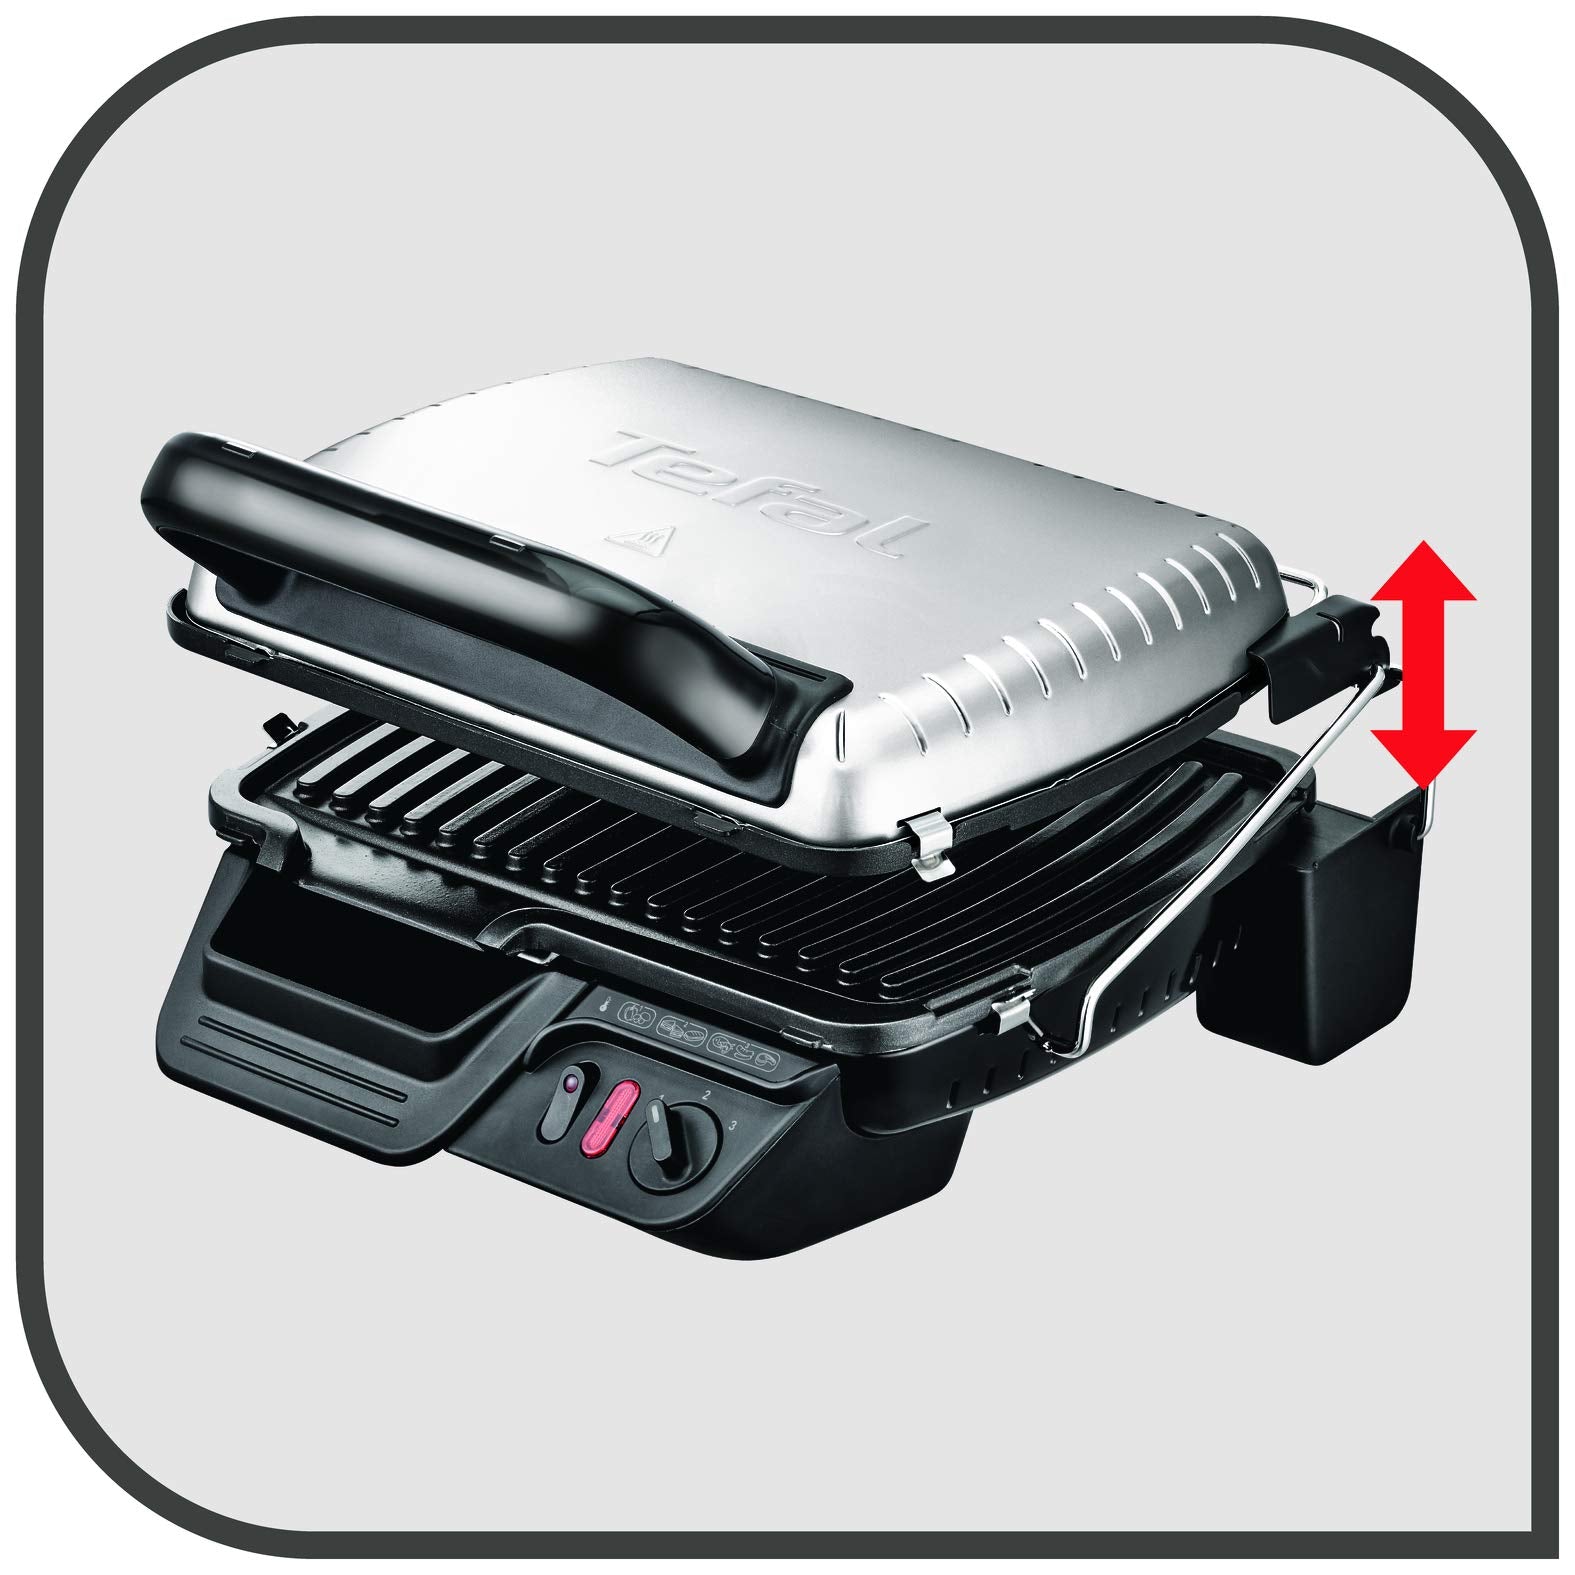 Tefal Sandwich maker, Ultra compact grill, 1 year warranty شواية كهربائية صغيرة مضغوطة الترا كومباكت 2000 واط ستانلس ستيل من تيفال، اسود